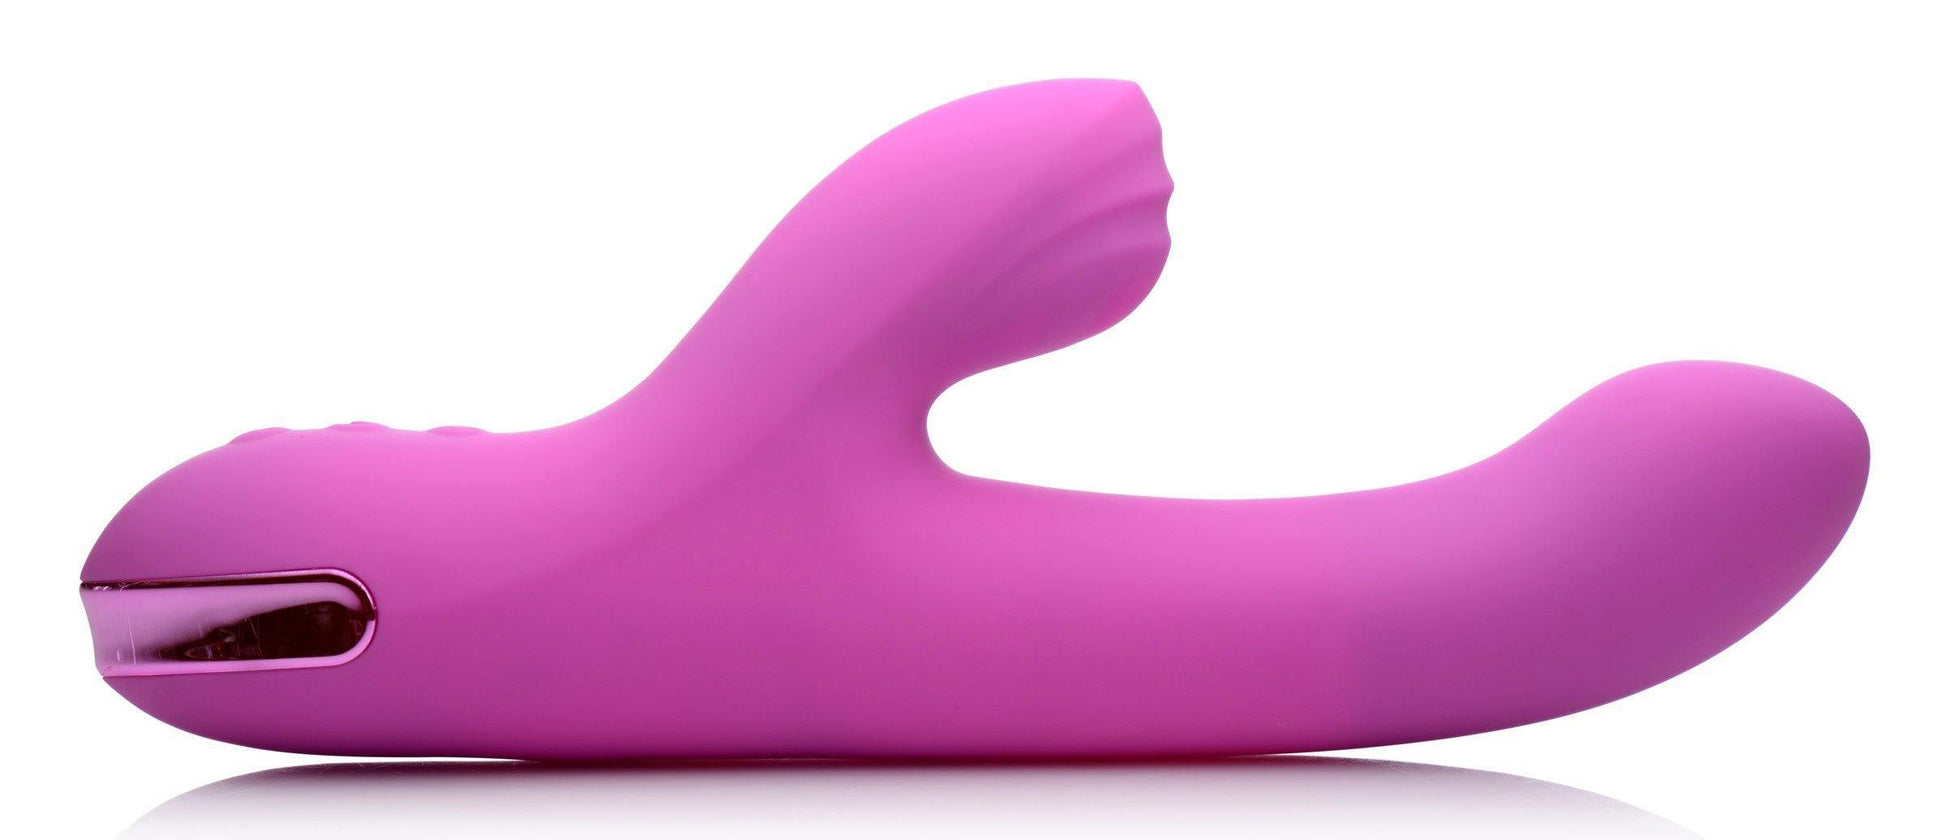 5 Star Rabbit - Pink - My Sex Toy Hub